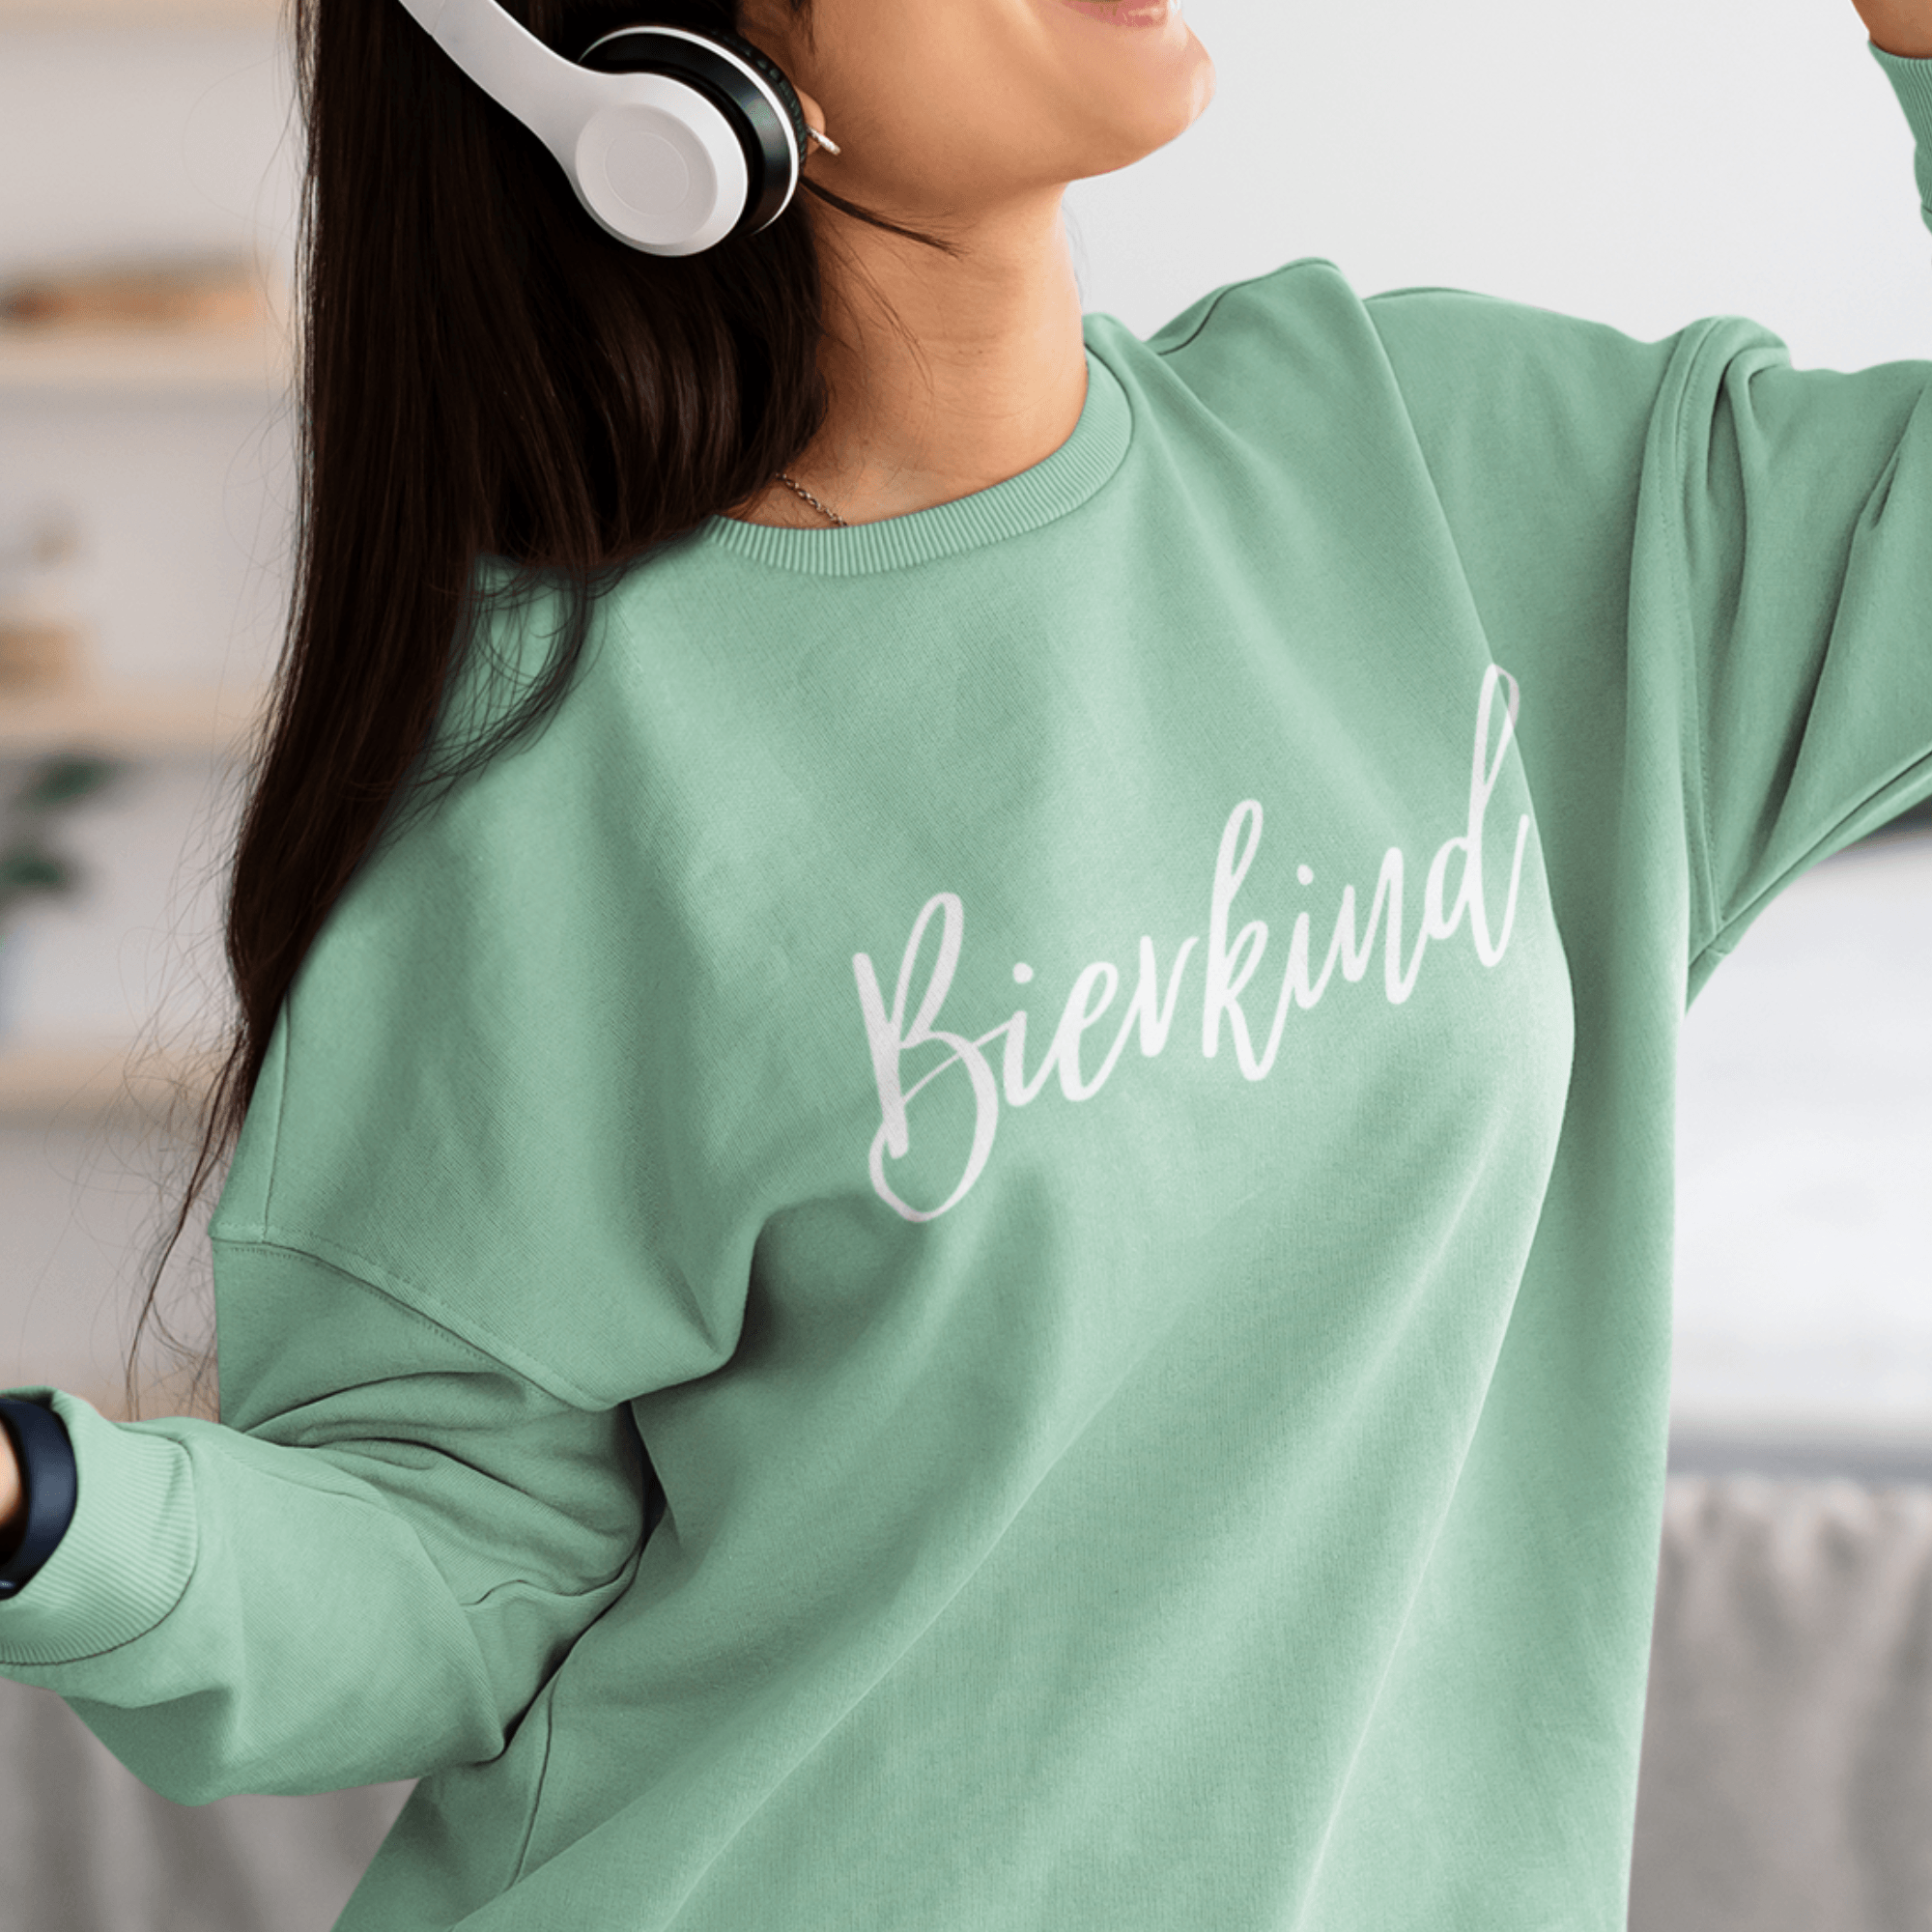 BIERKIND  - Relaxed Sweatshirt